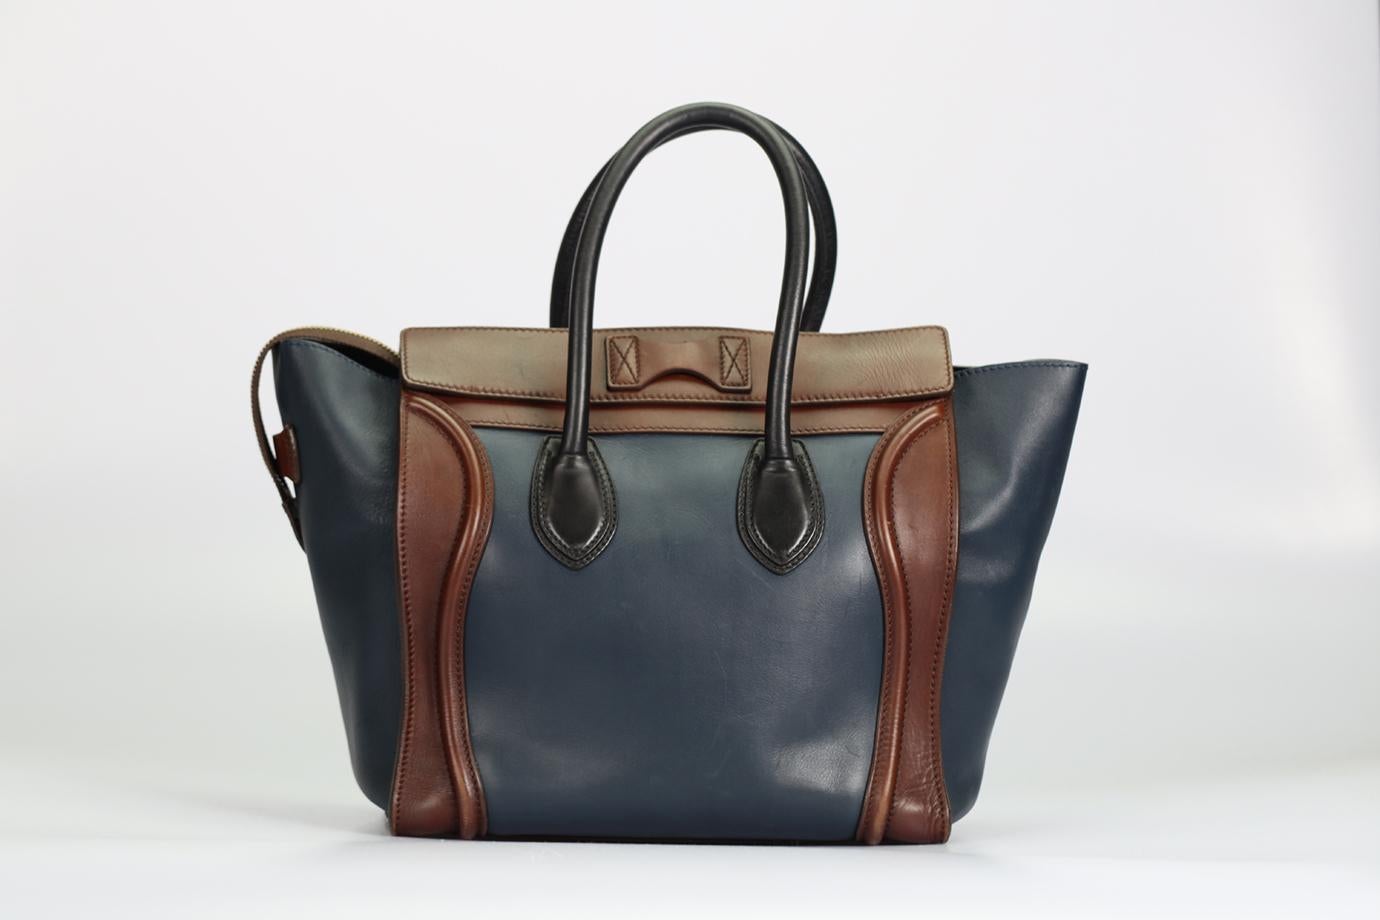 Celine Luggage Mini Leather Tote Bag For Sale 2